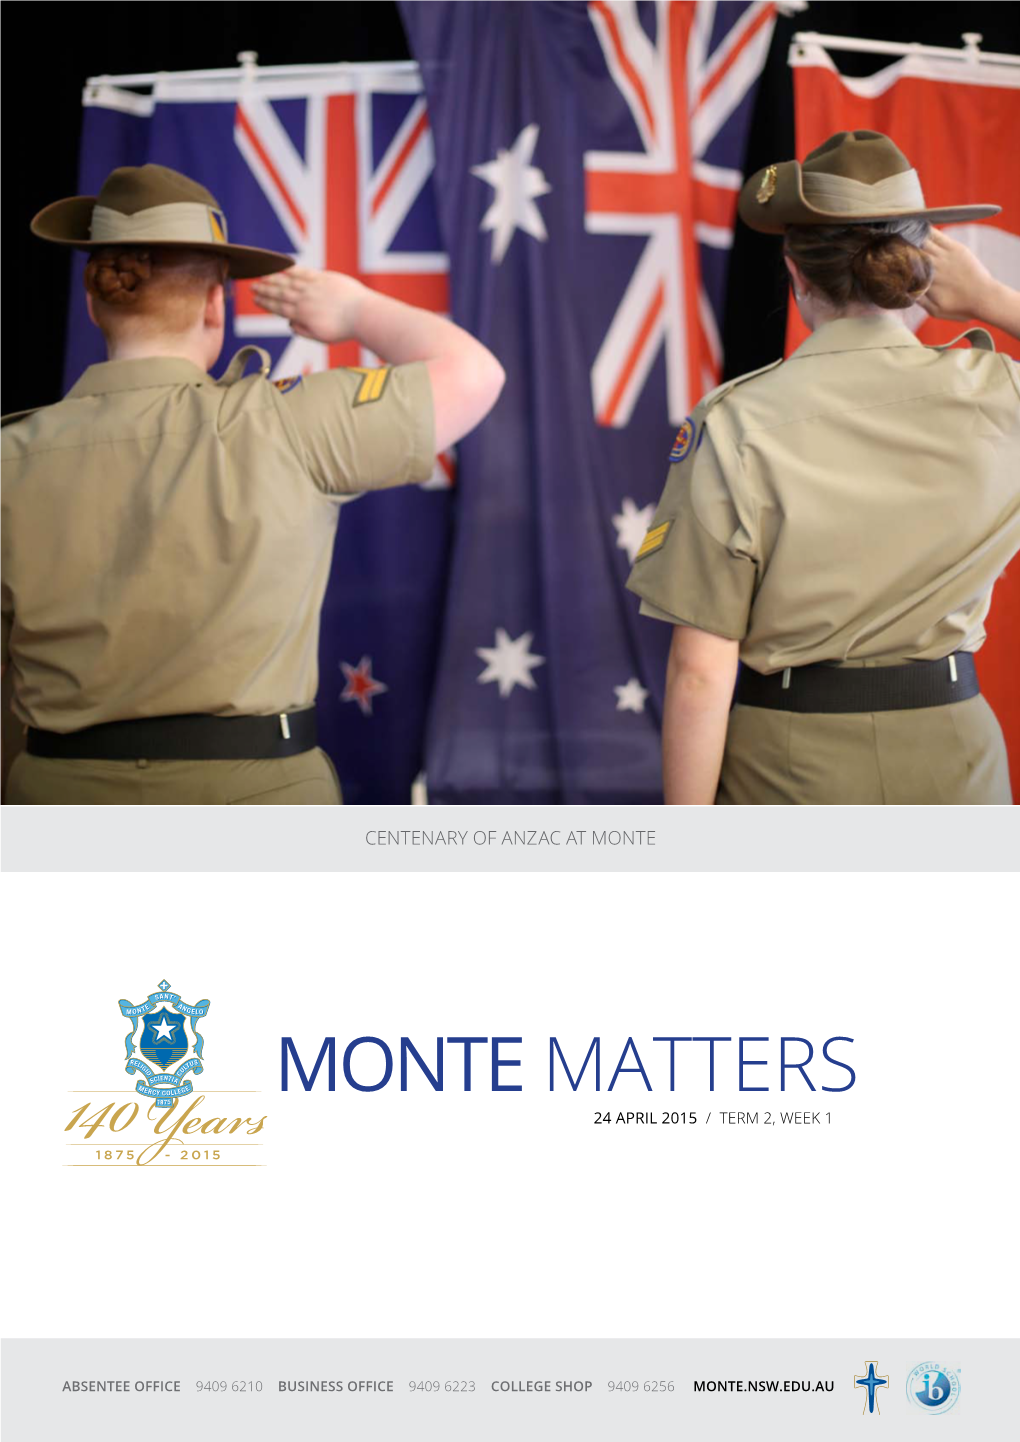 Monte Matters 24 April 2015 / Term 2, Week 1